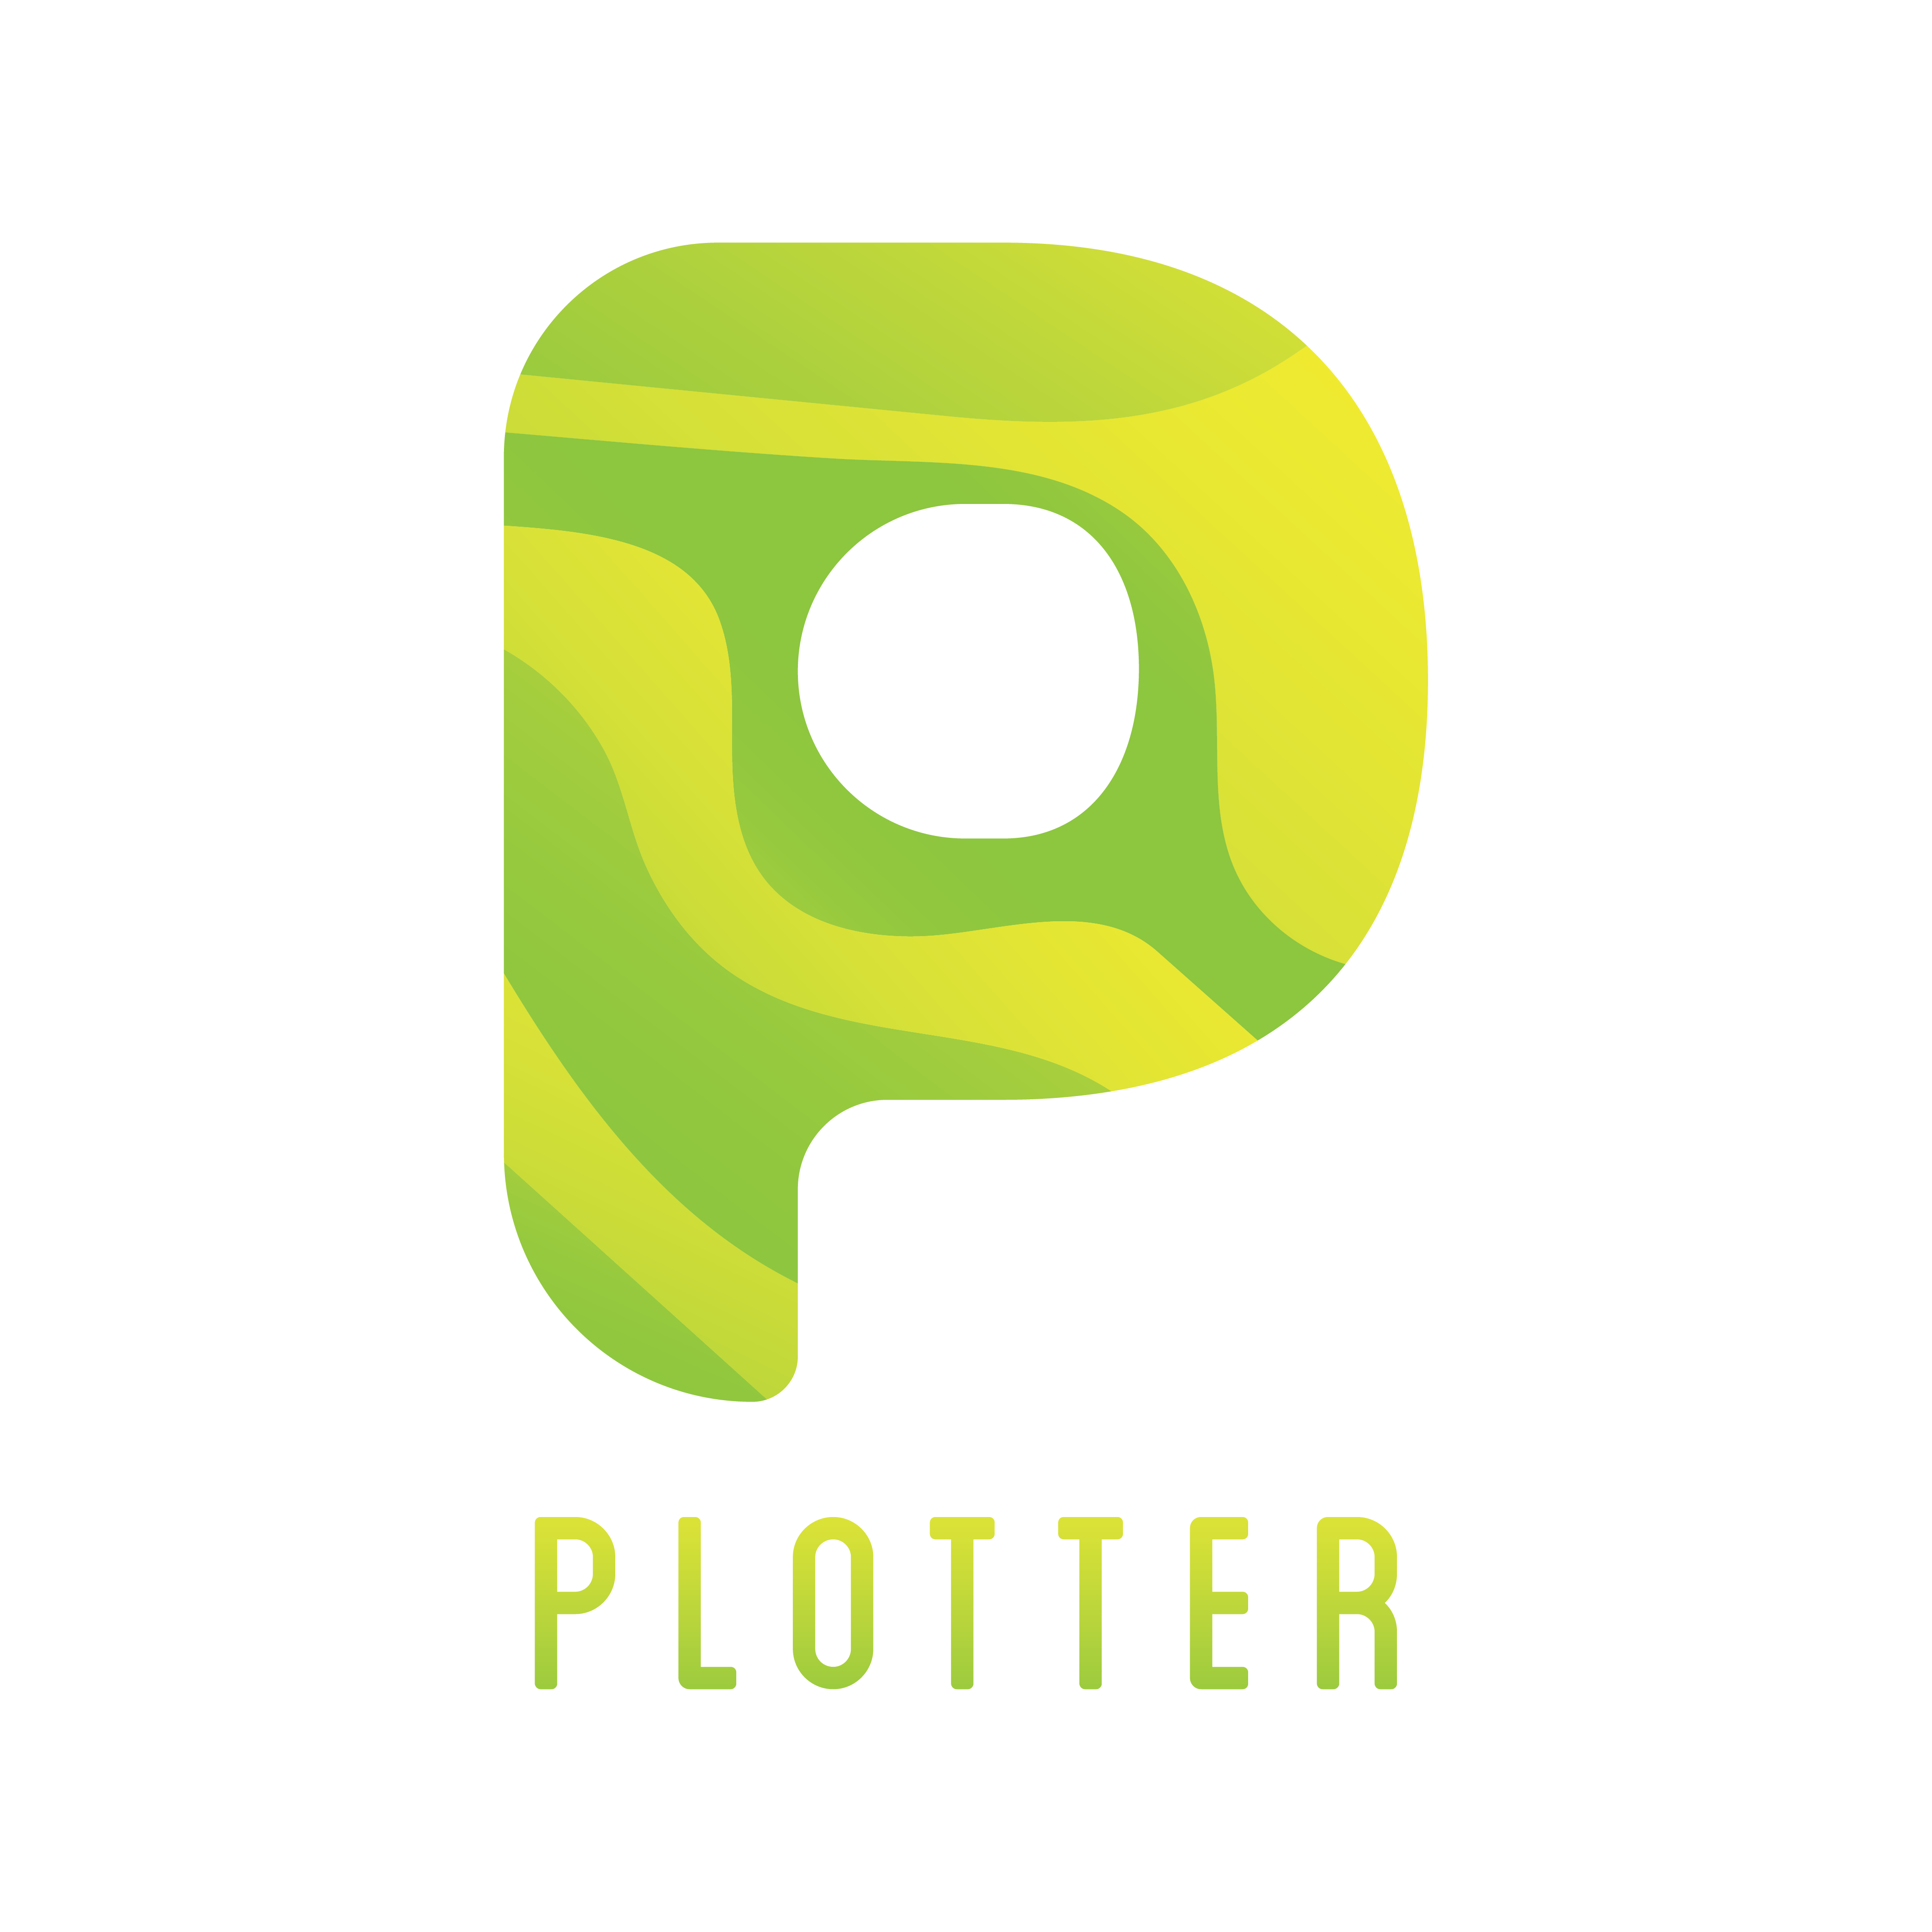 Plotter_F-01.png